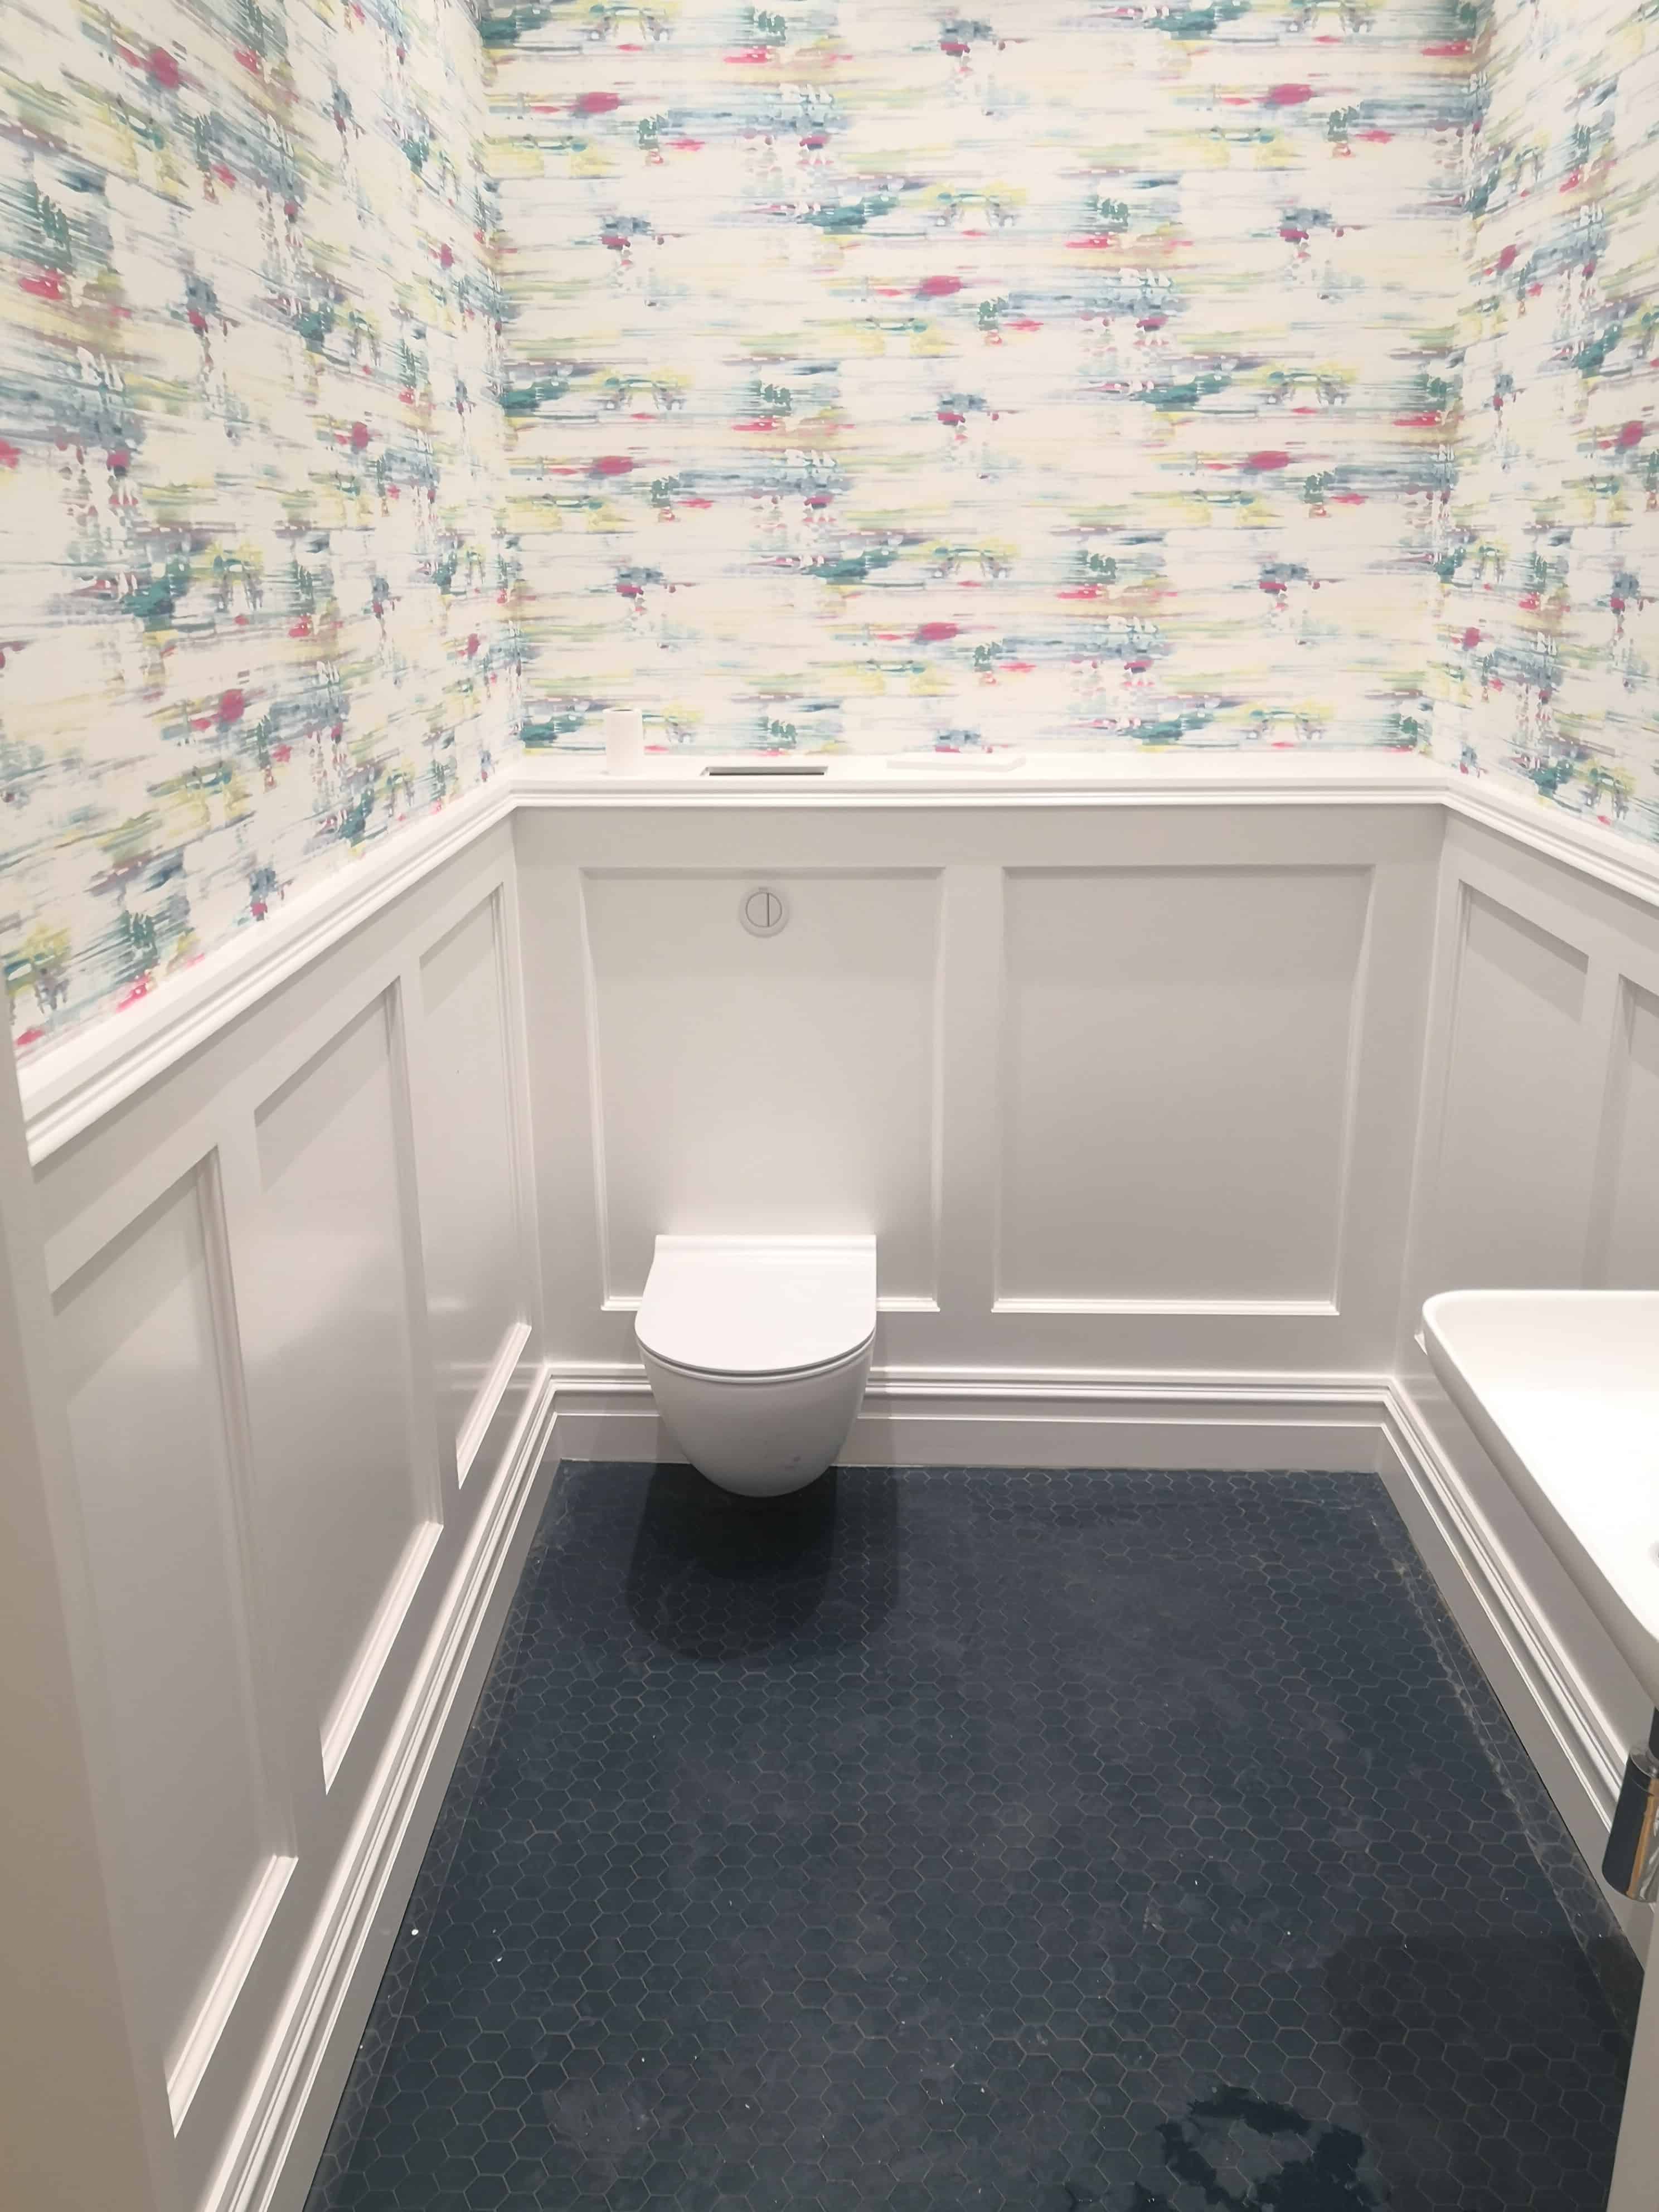 Referensjobb "Väggpanel på toalett" utfört av AKSE Design & Bygg AB 